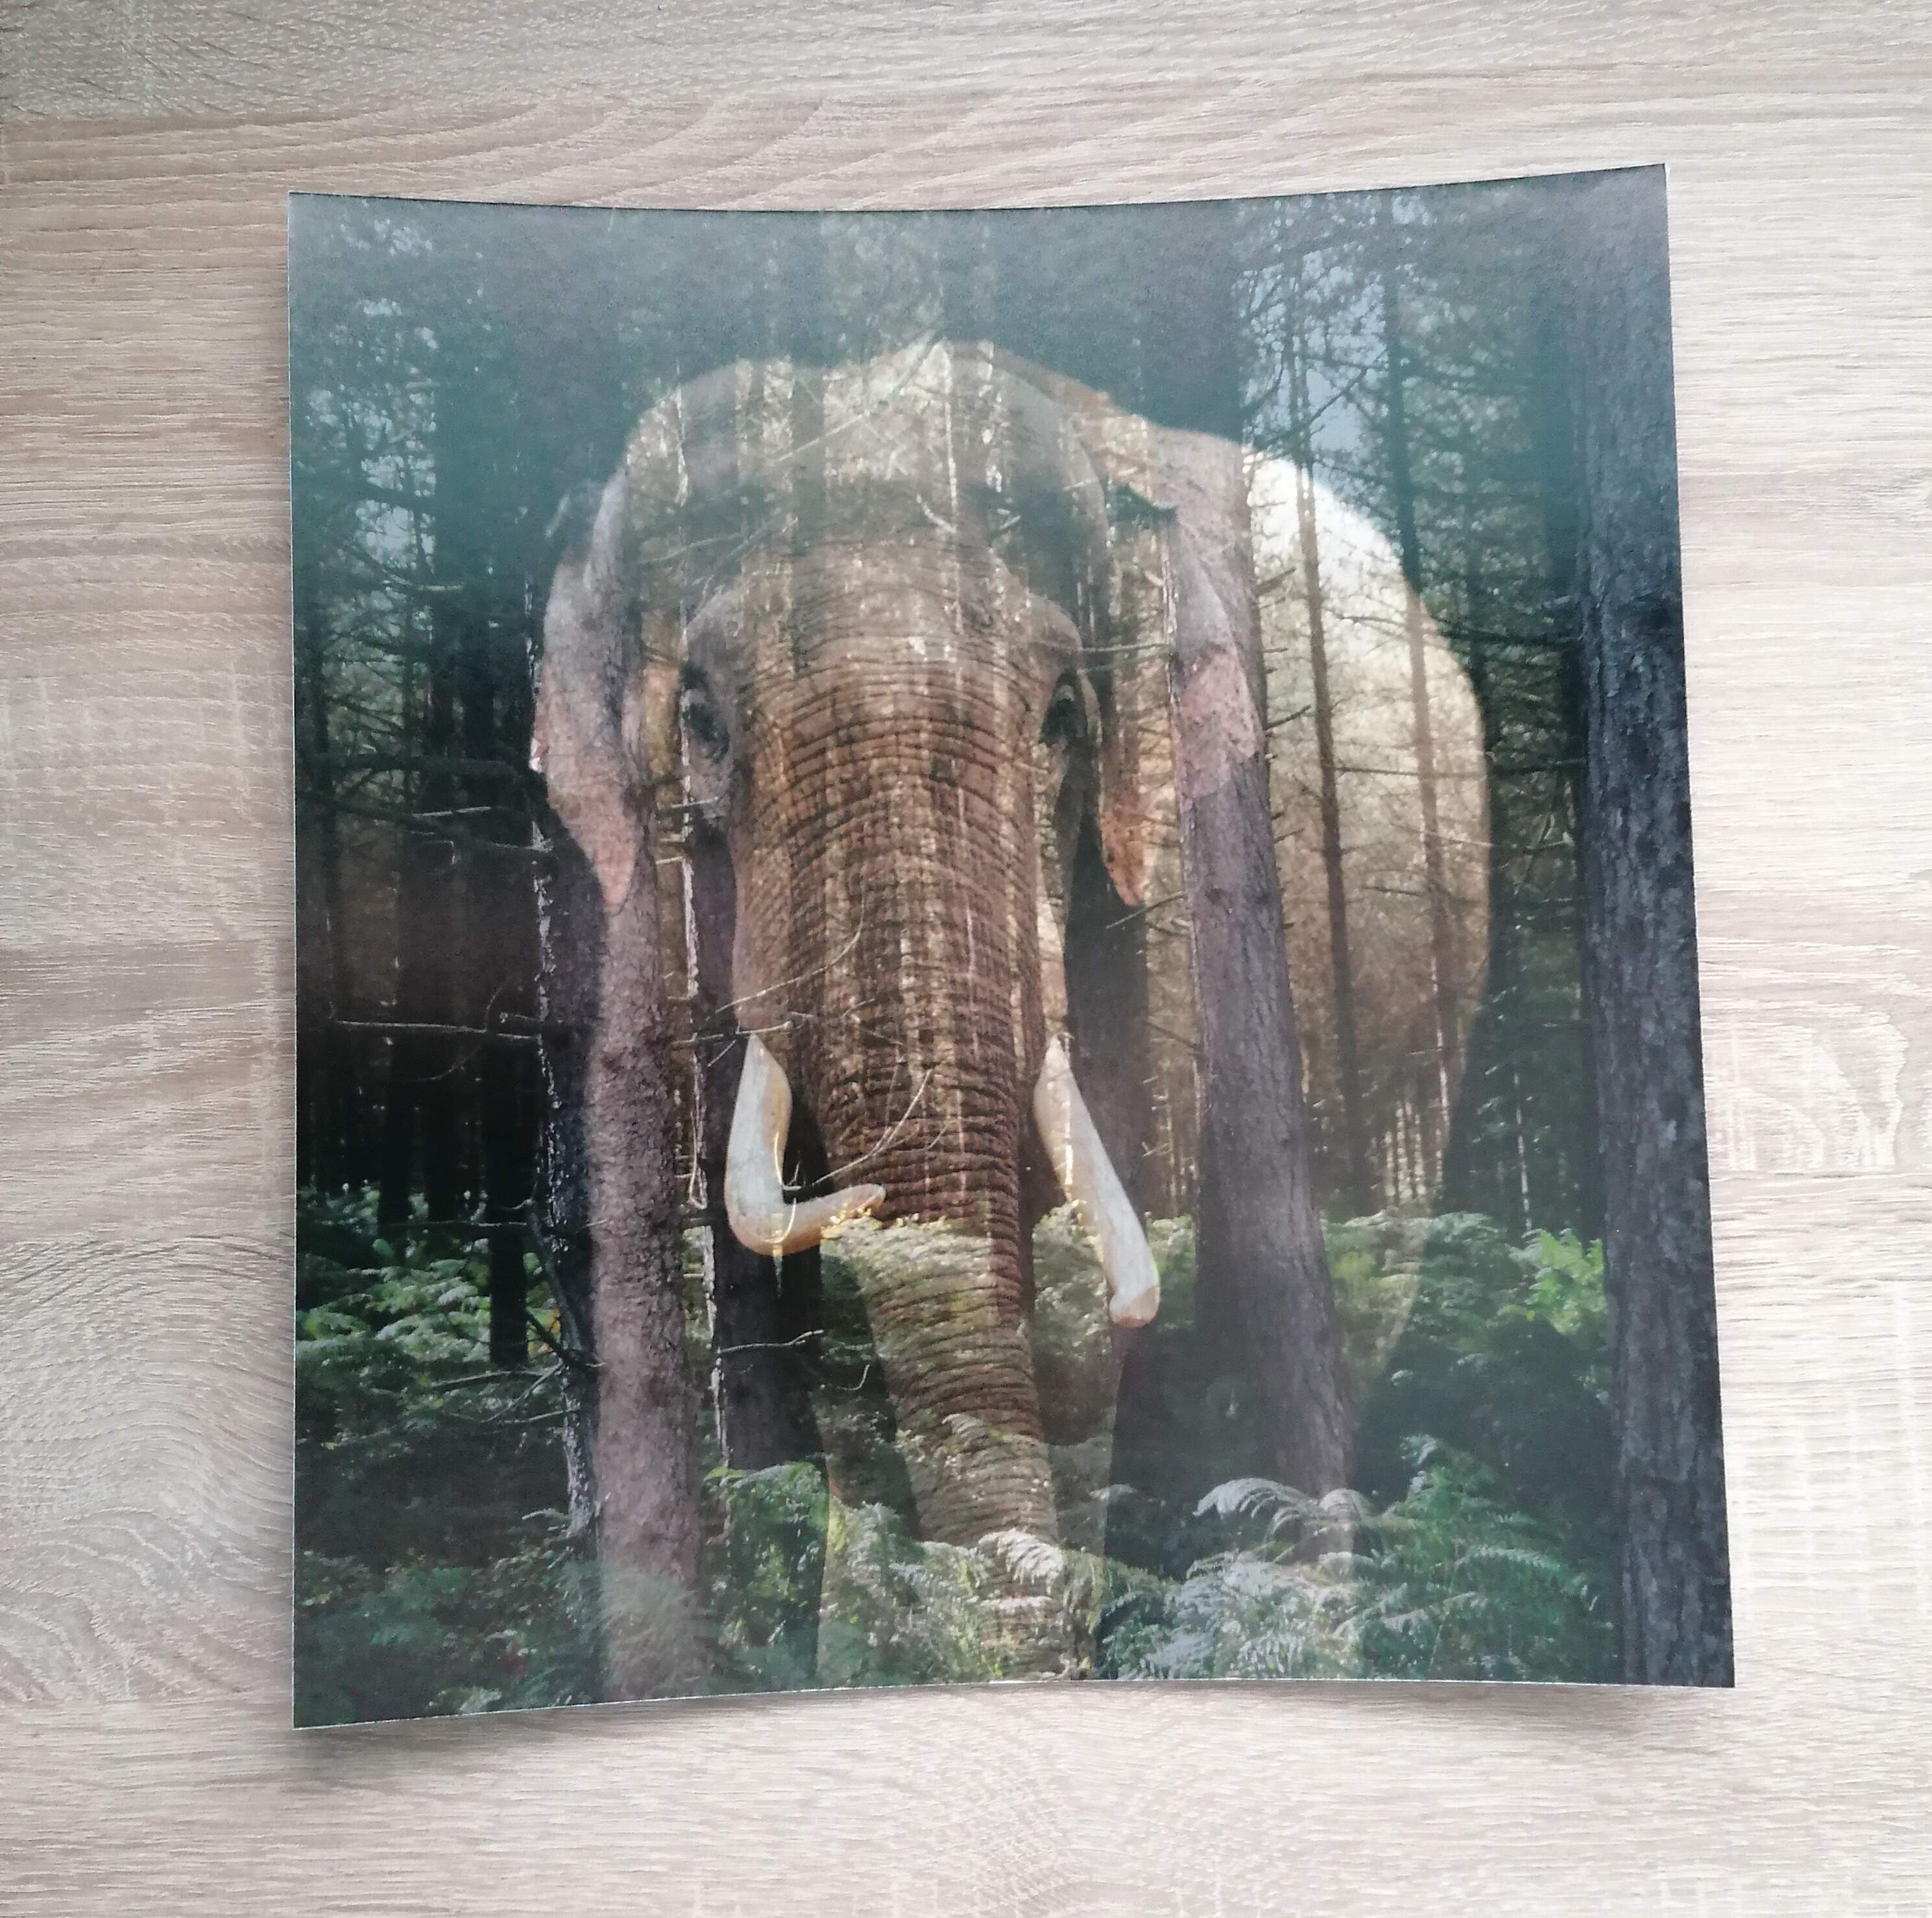 Disappearing elephant photo